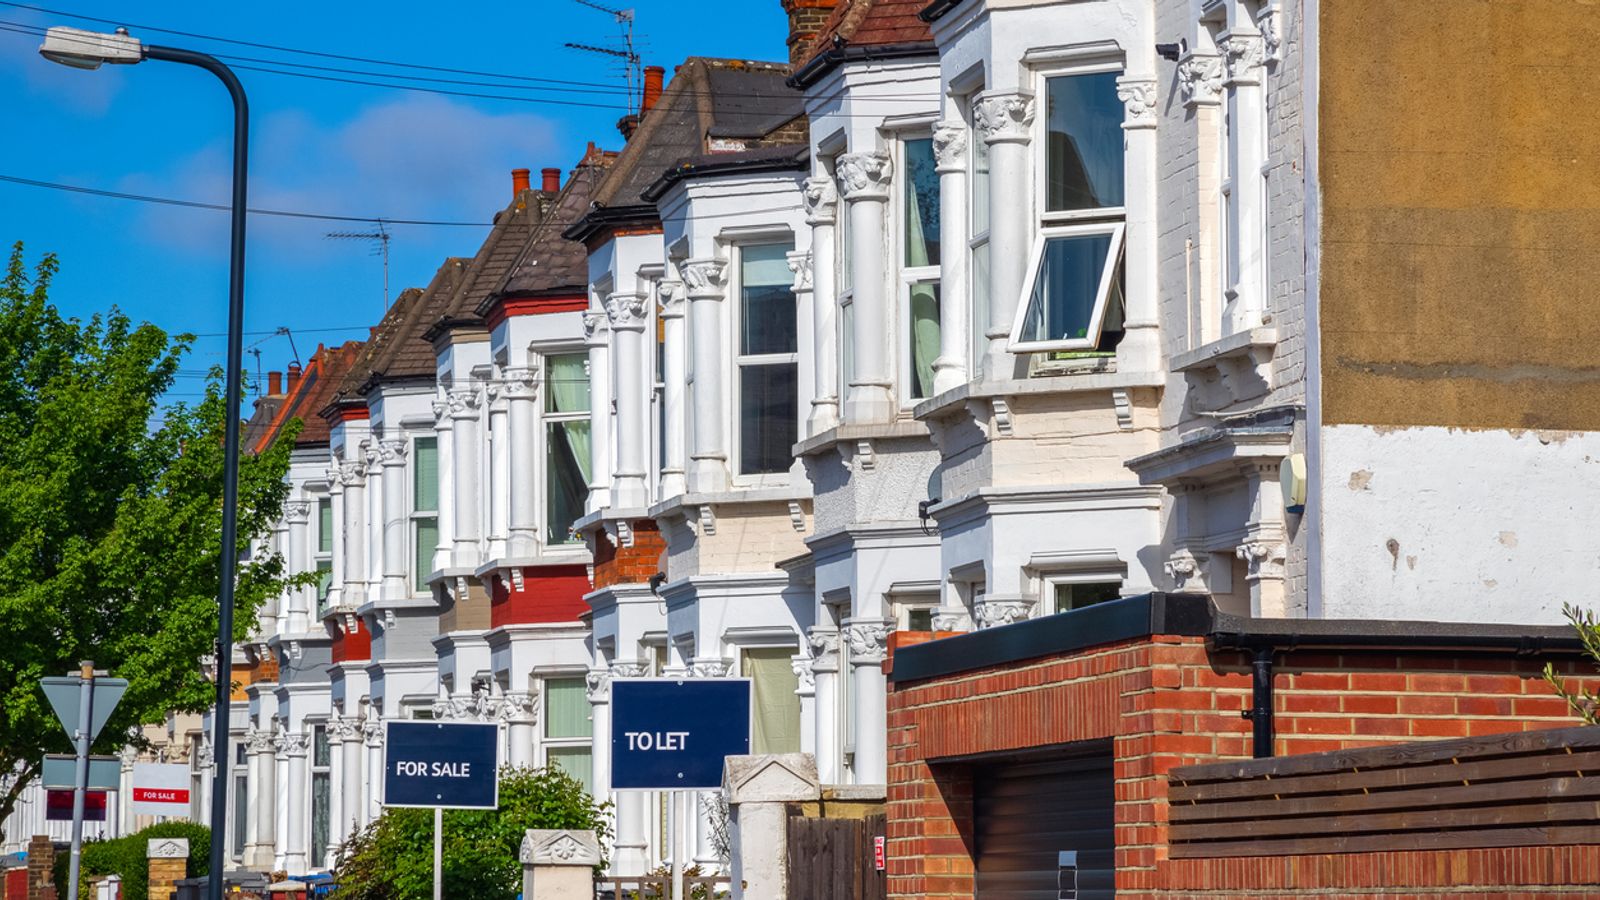 Buying own home has 'got harder' under Conservatives, Rishi Sunak says